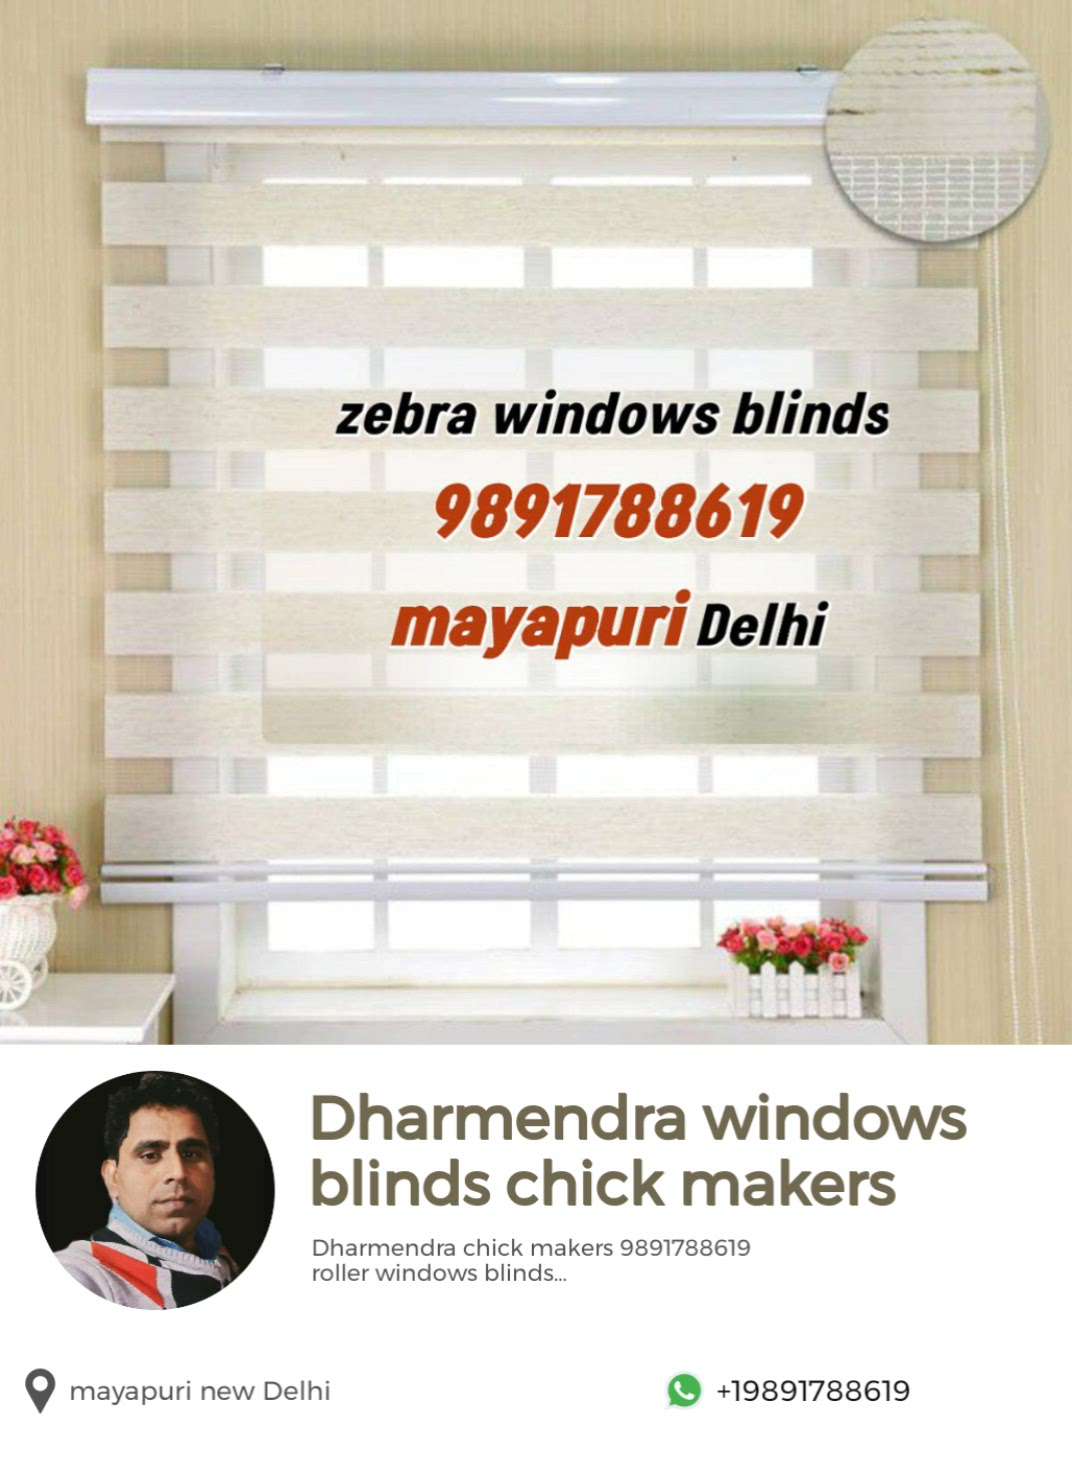 How to install roller zebra windows blinds installation mayapuri Delhi
9891788619 Dharmendra chick makers